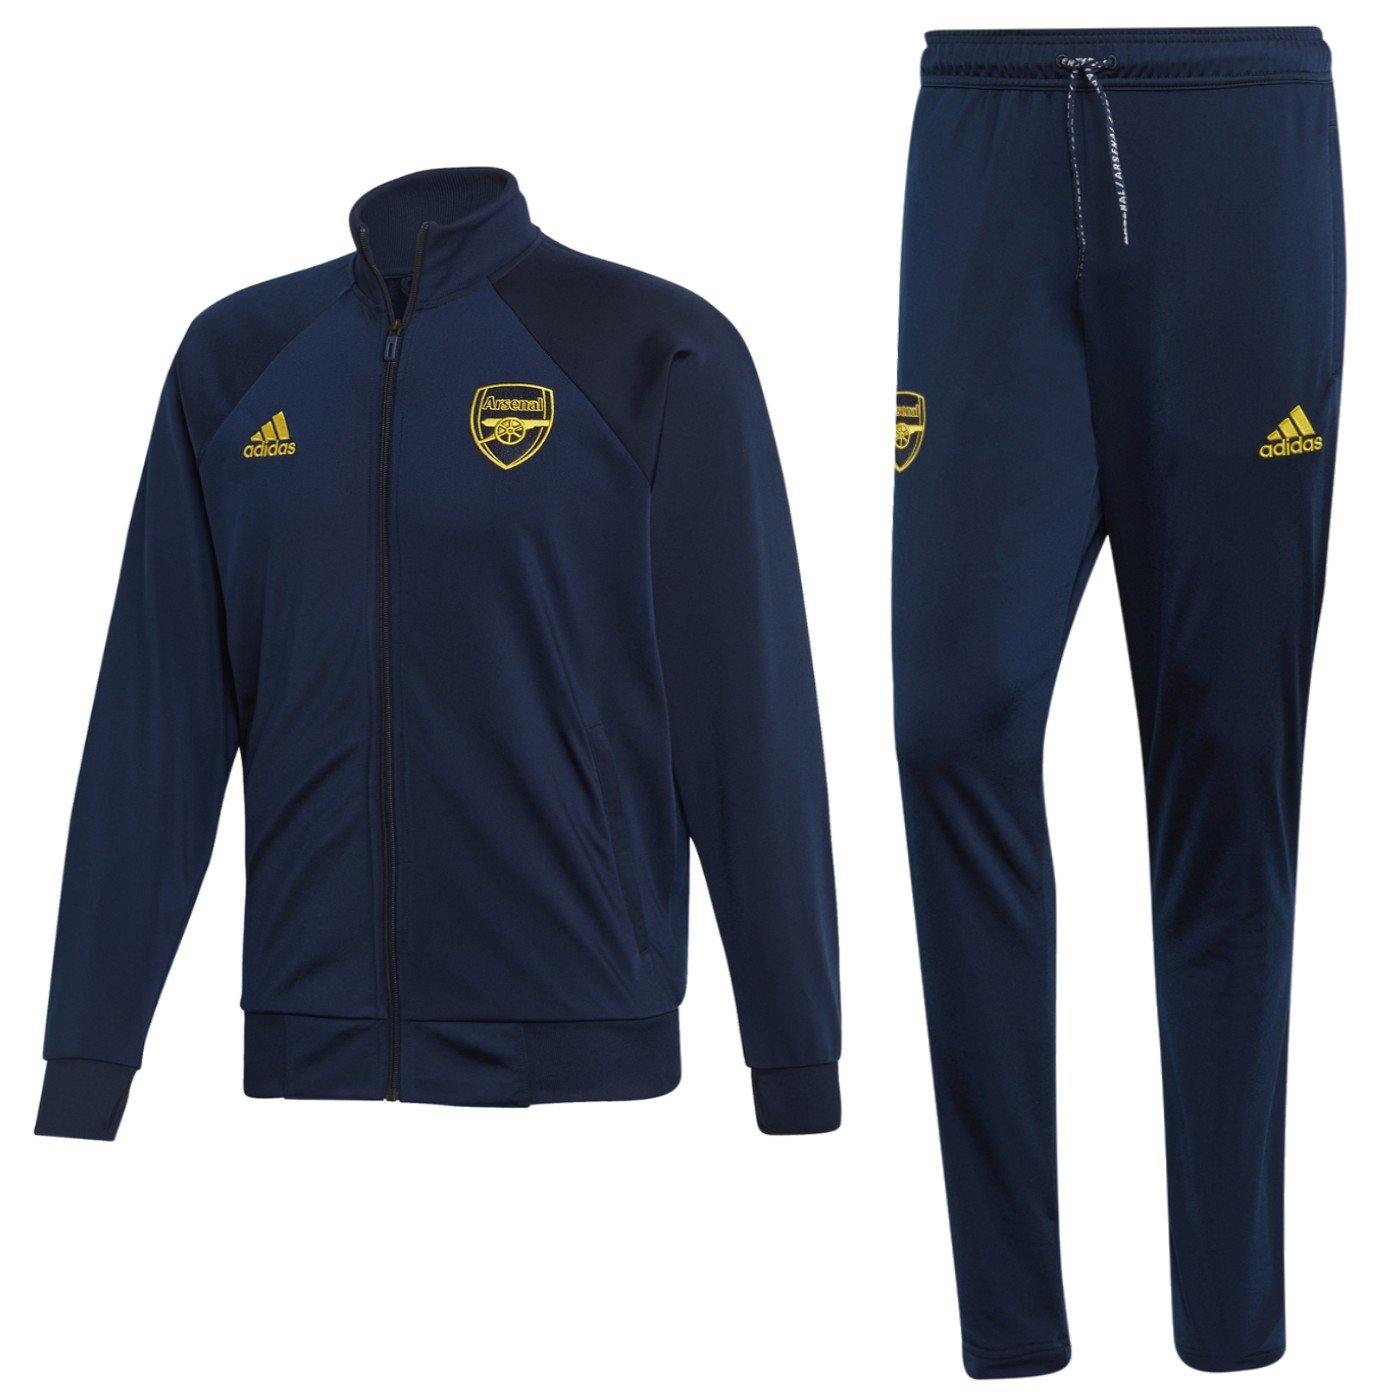 Arsenal presentation Soccer tracksuit 2019/20 - Adidas – SoccerTracksuits.com